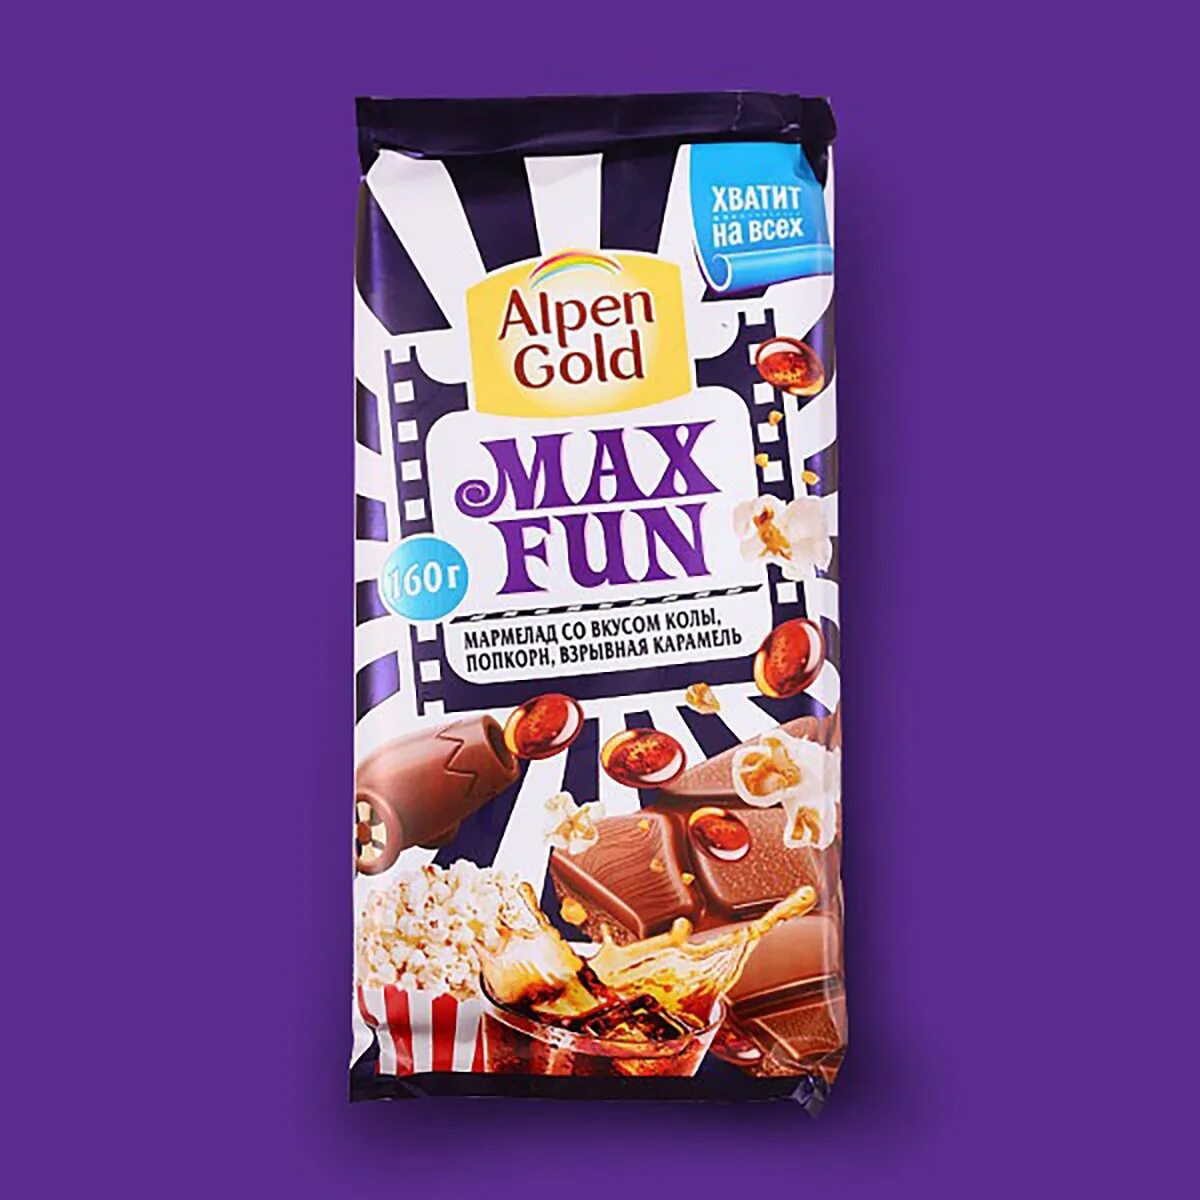 Fun mix. Шоколад Альпен Гольд Макс фан. Шоколадка альпенголд Макс. Alpen Gold Max fun. Альпен Гольд Макс фан вкусы.